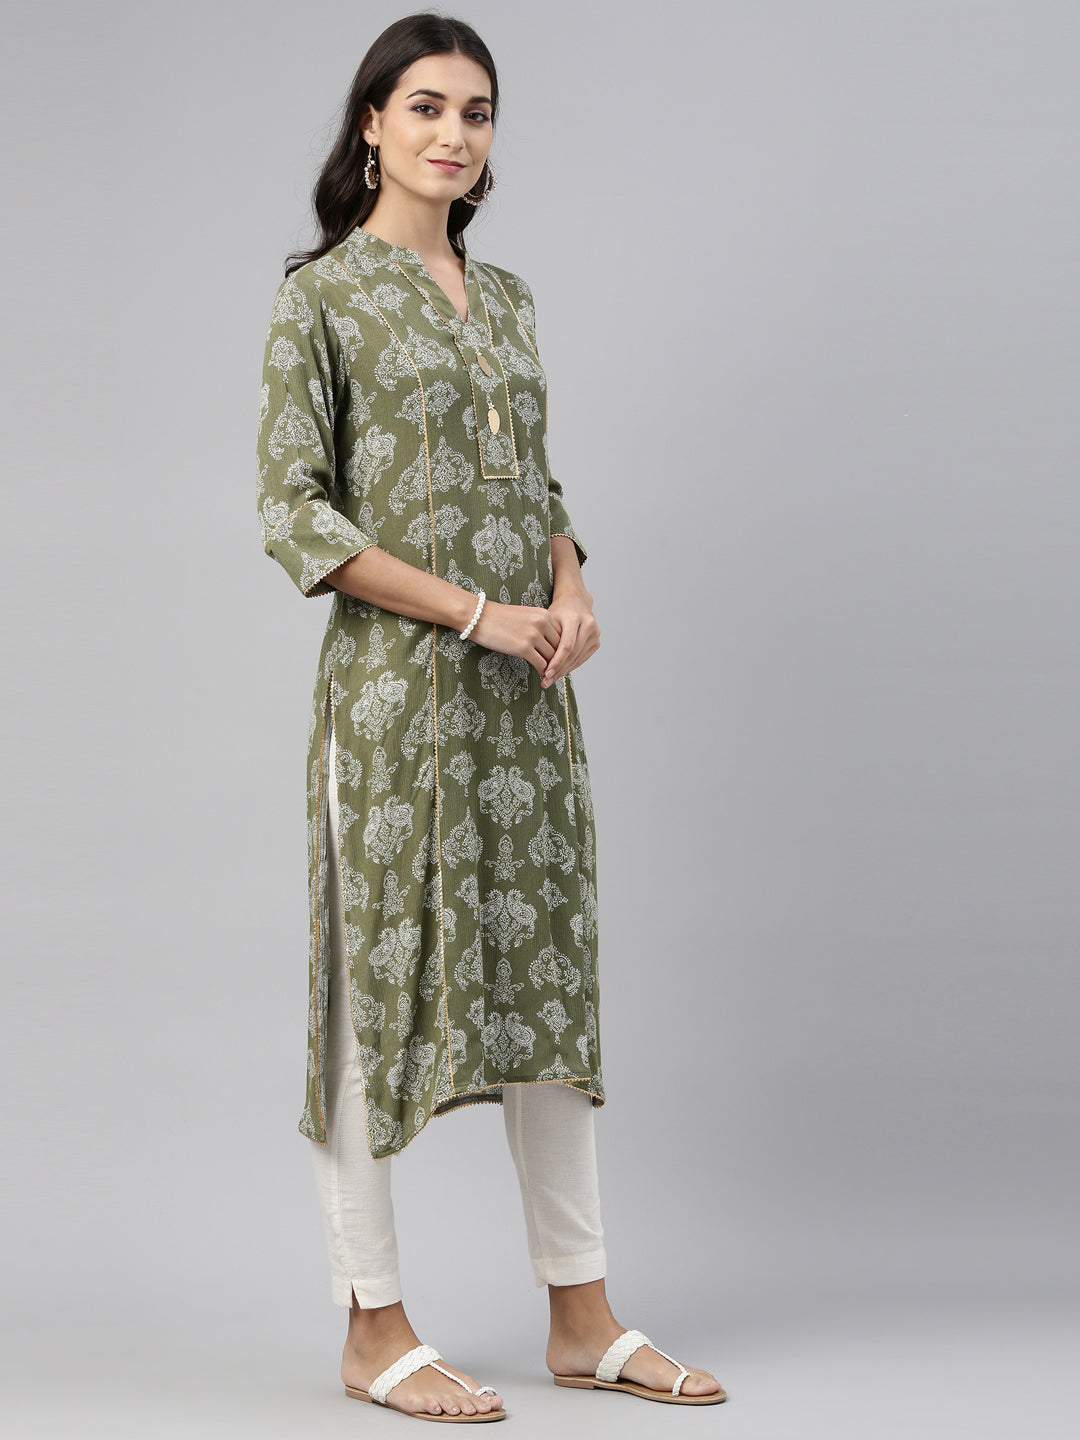 Neeru's Green Color Rayon Fabric Tunic